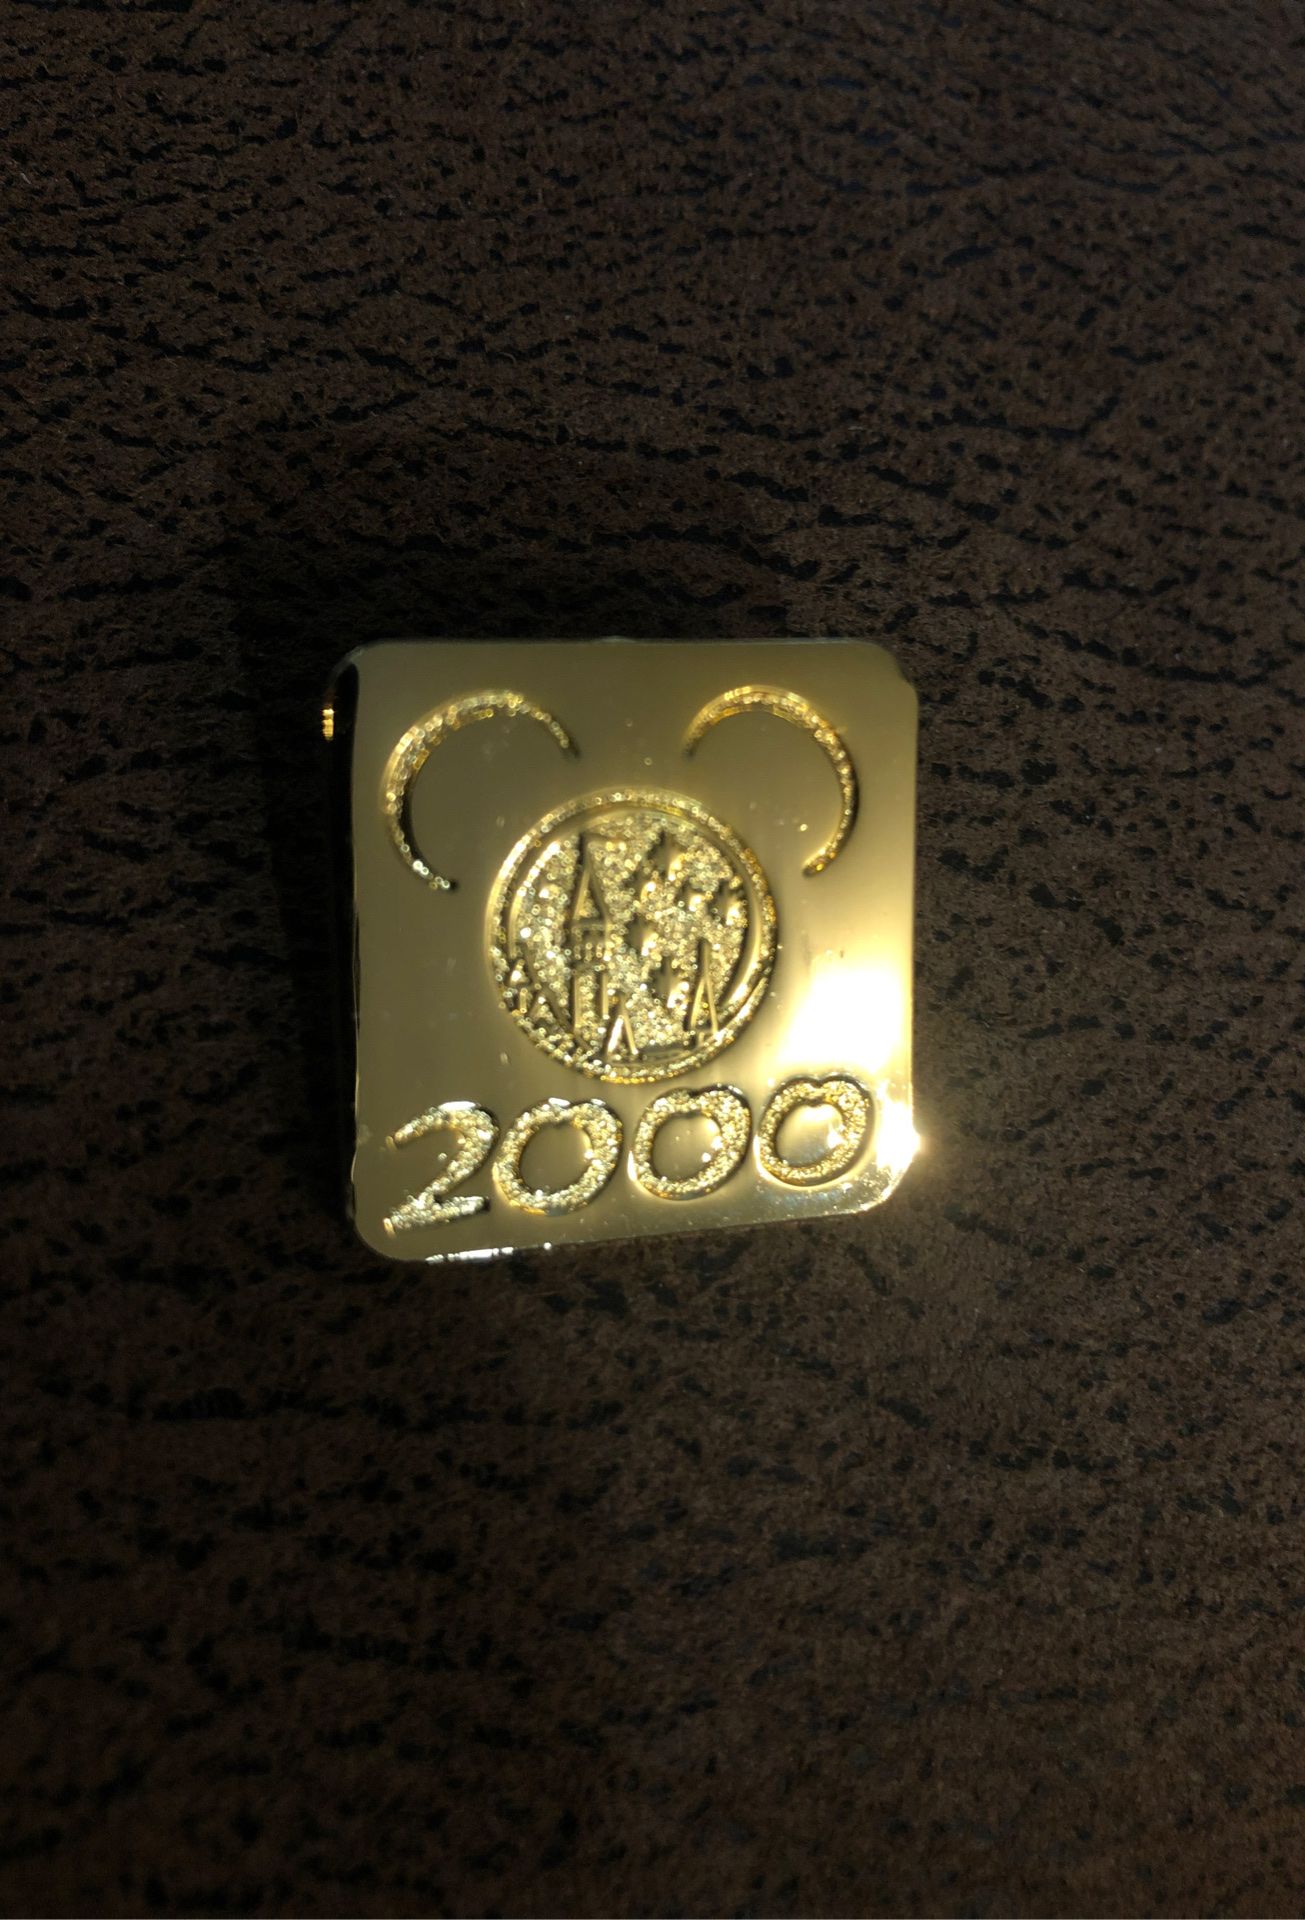 Disney annual passport pin 2000